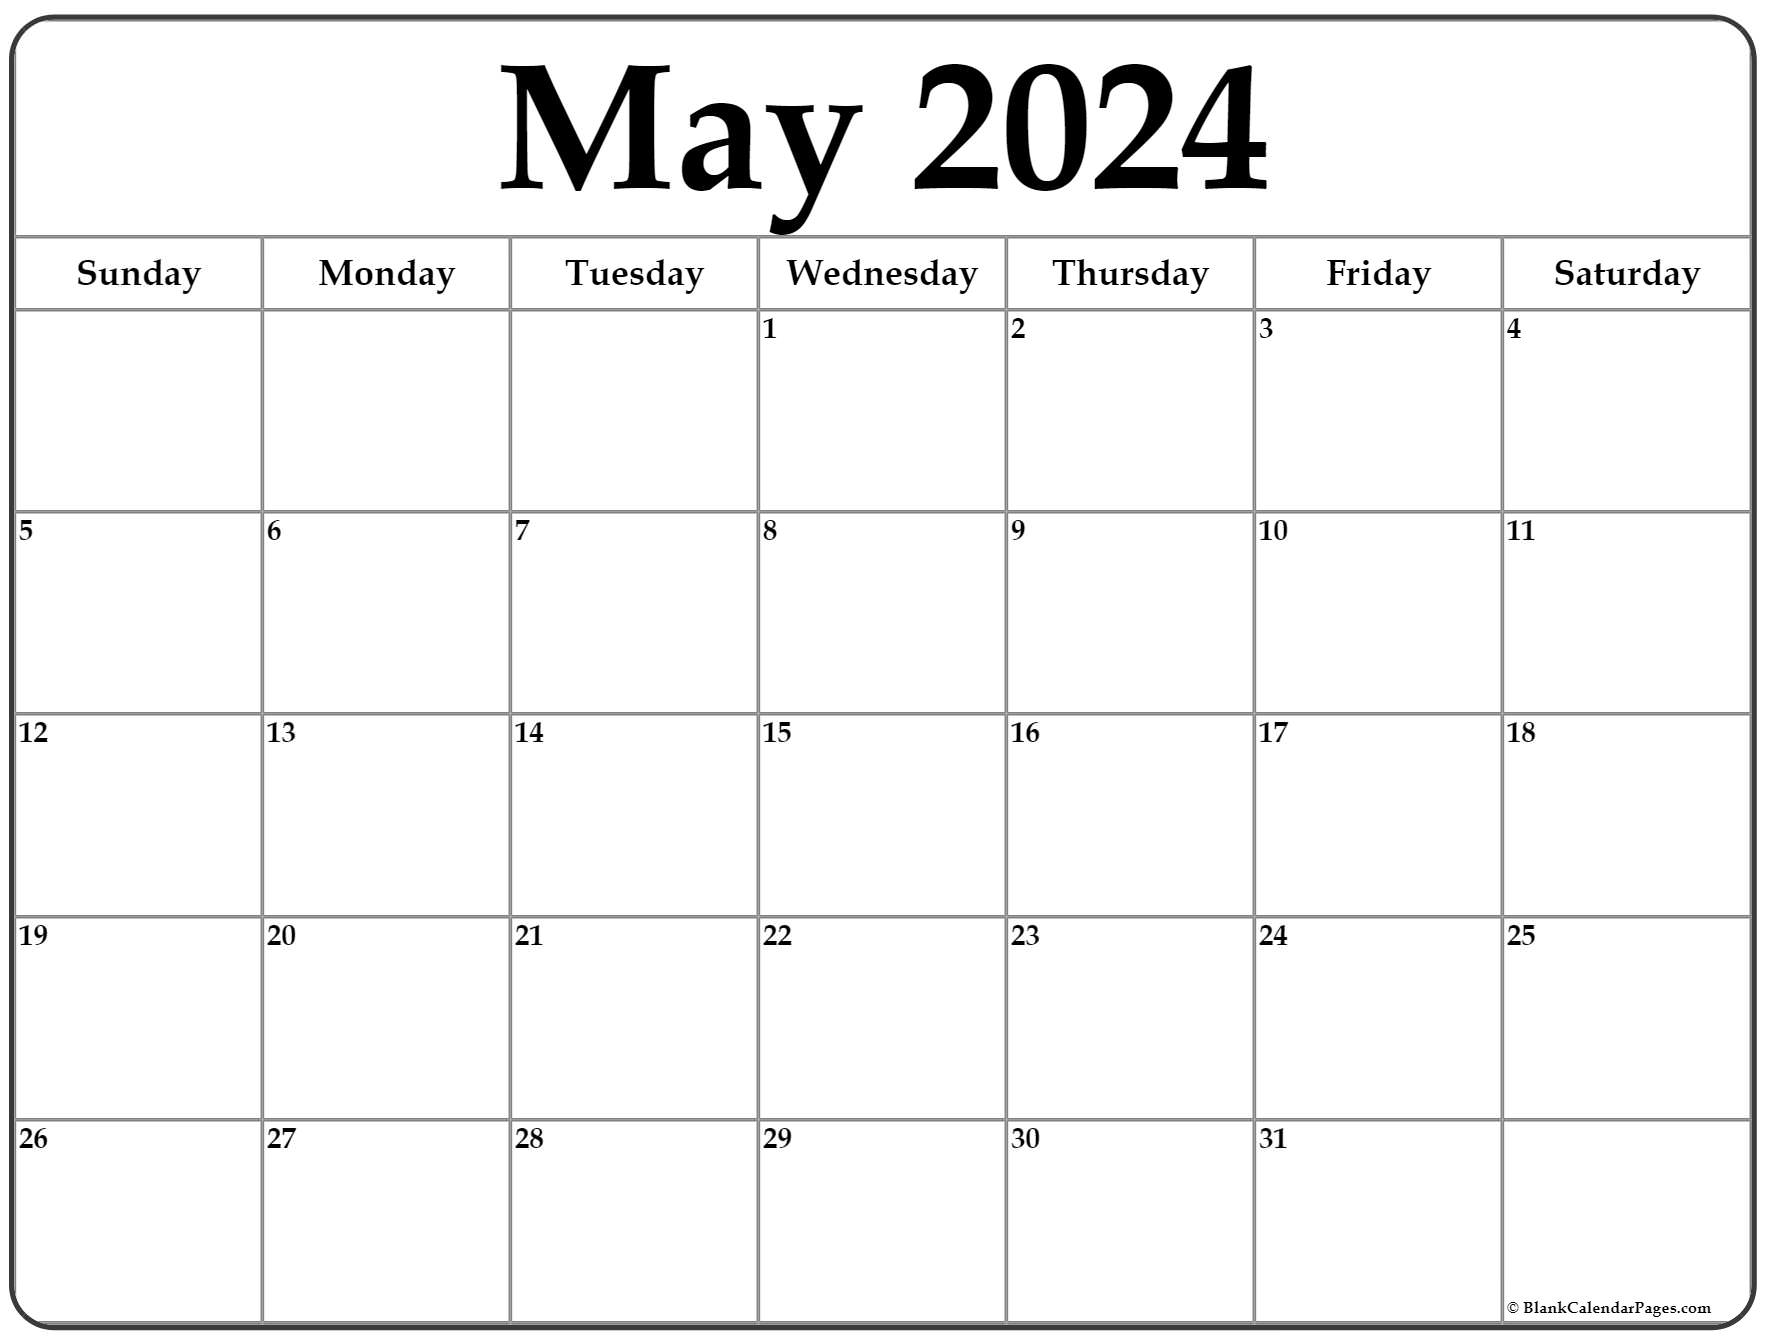 Print May Calendar 2022 May 2022 Calendar | Free Printable Calendar Templates